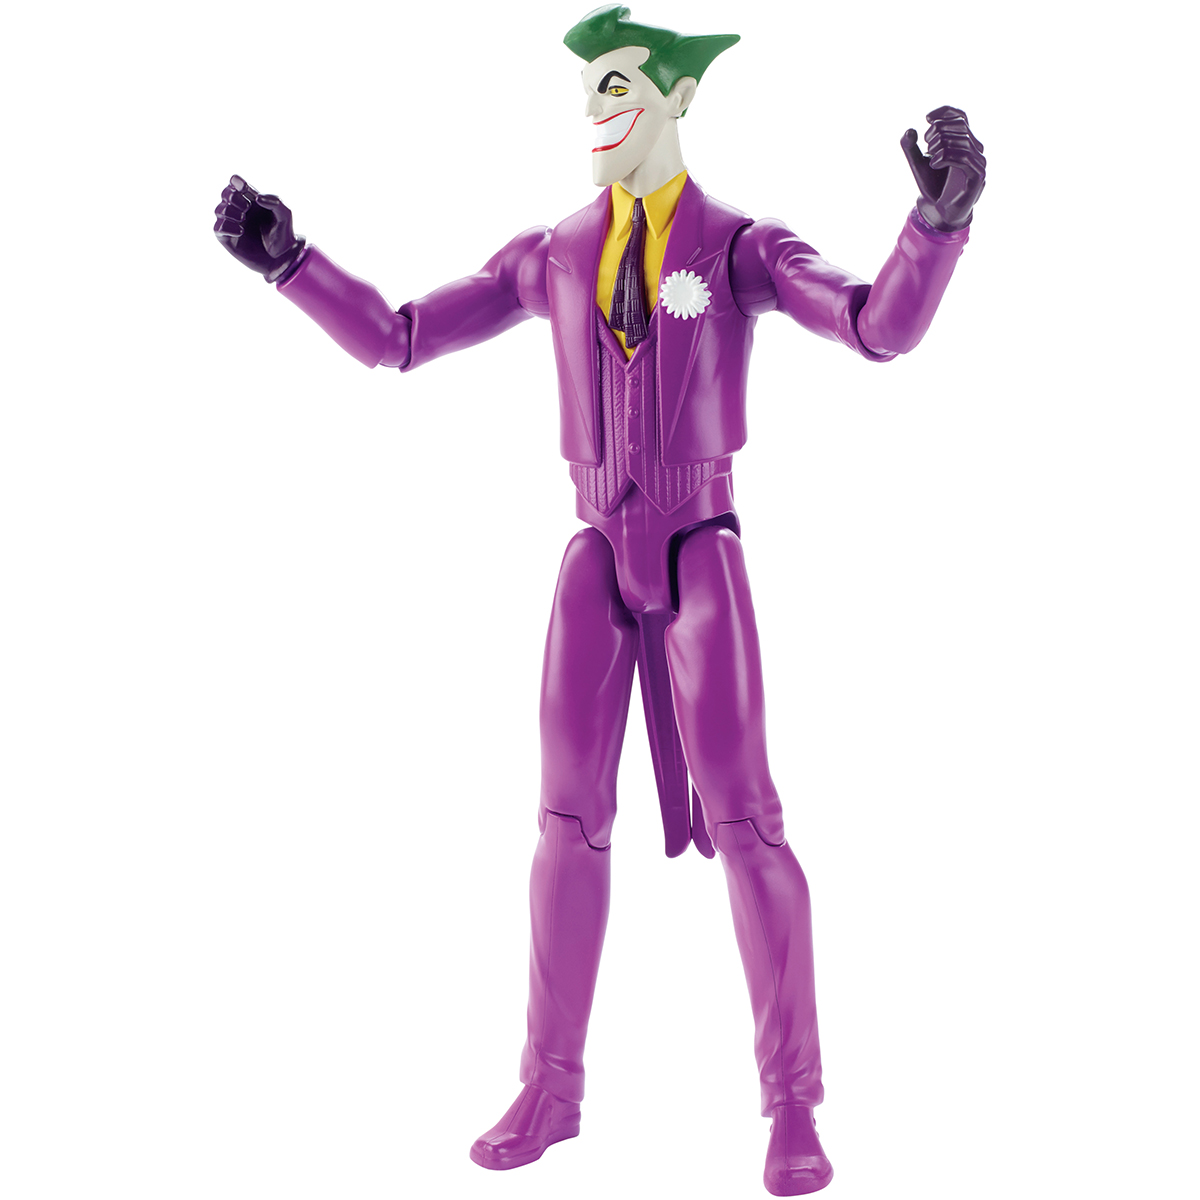 justice league joker actor